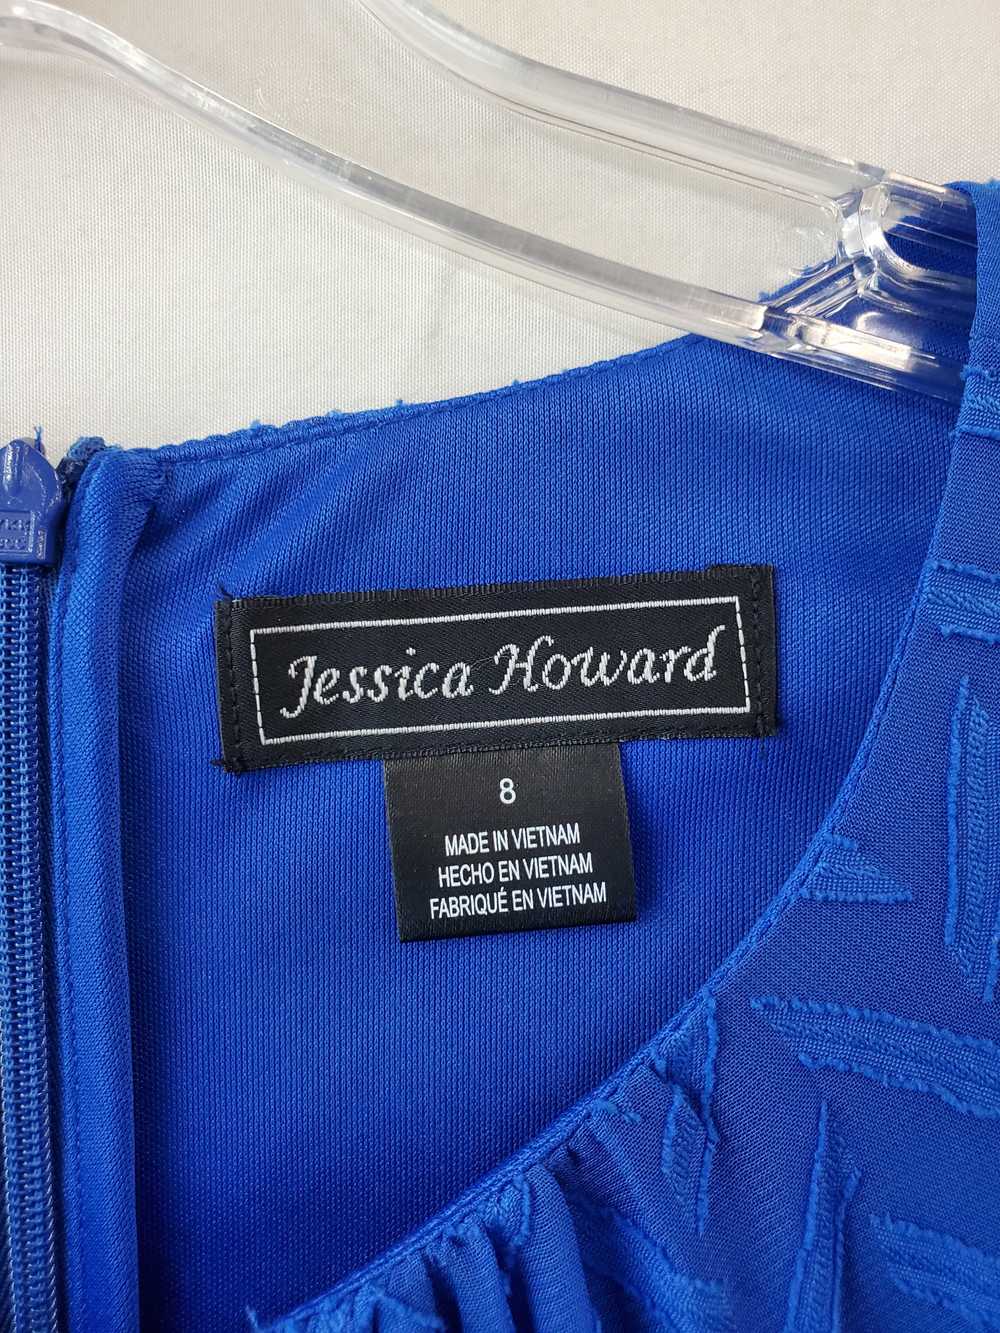 Jessica Howard Blue Tiered Ruffle Dress Size 8 - image 3